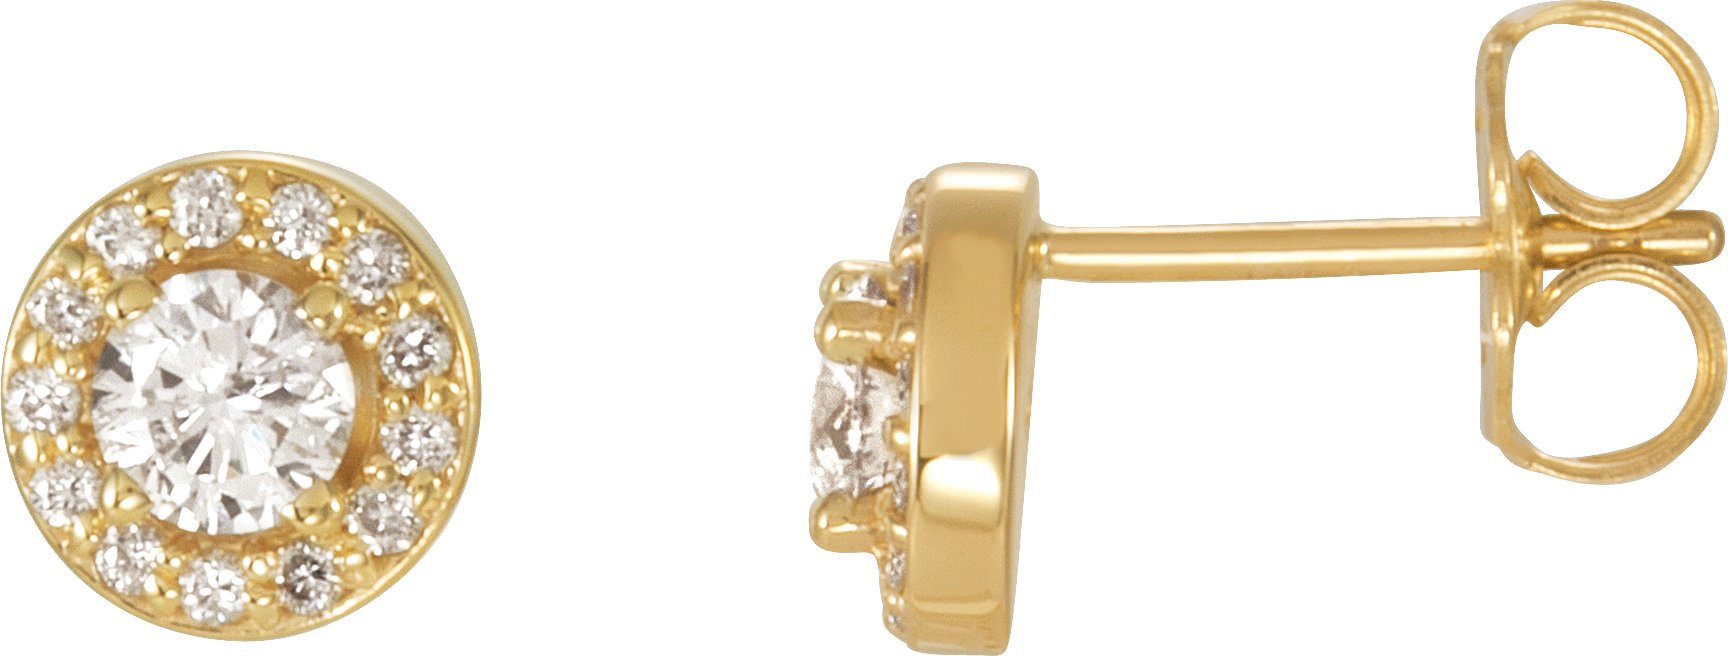 14K Yellow 3/8 CTW Natural Diamond Halo-Style Earrings